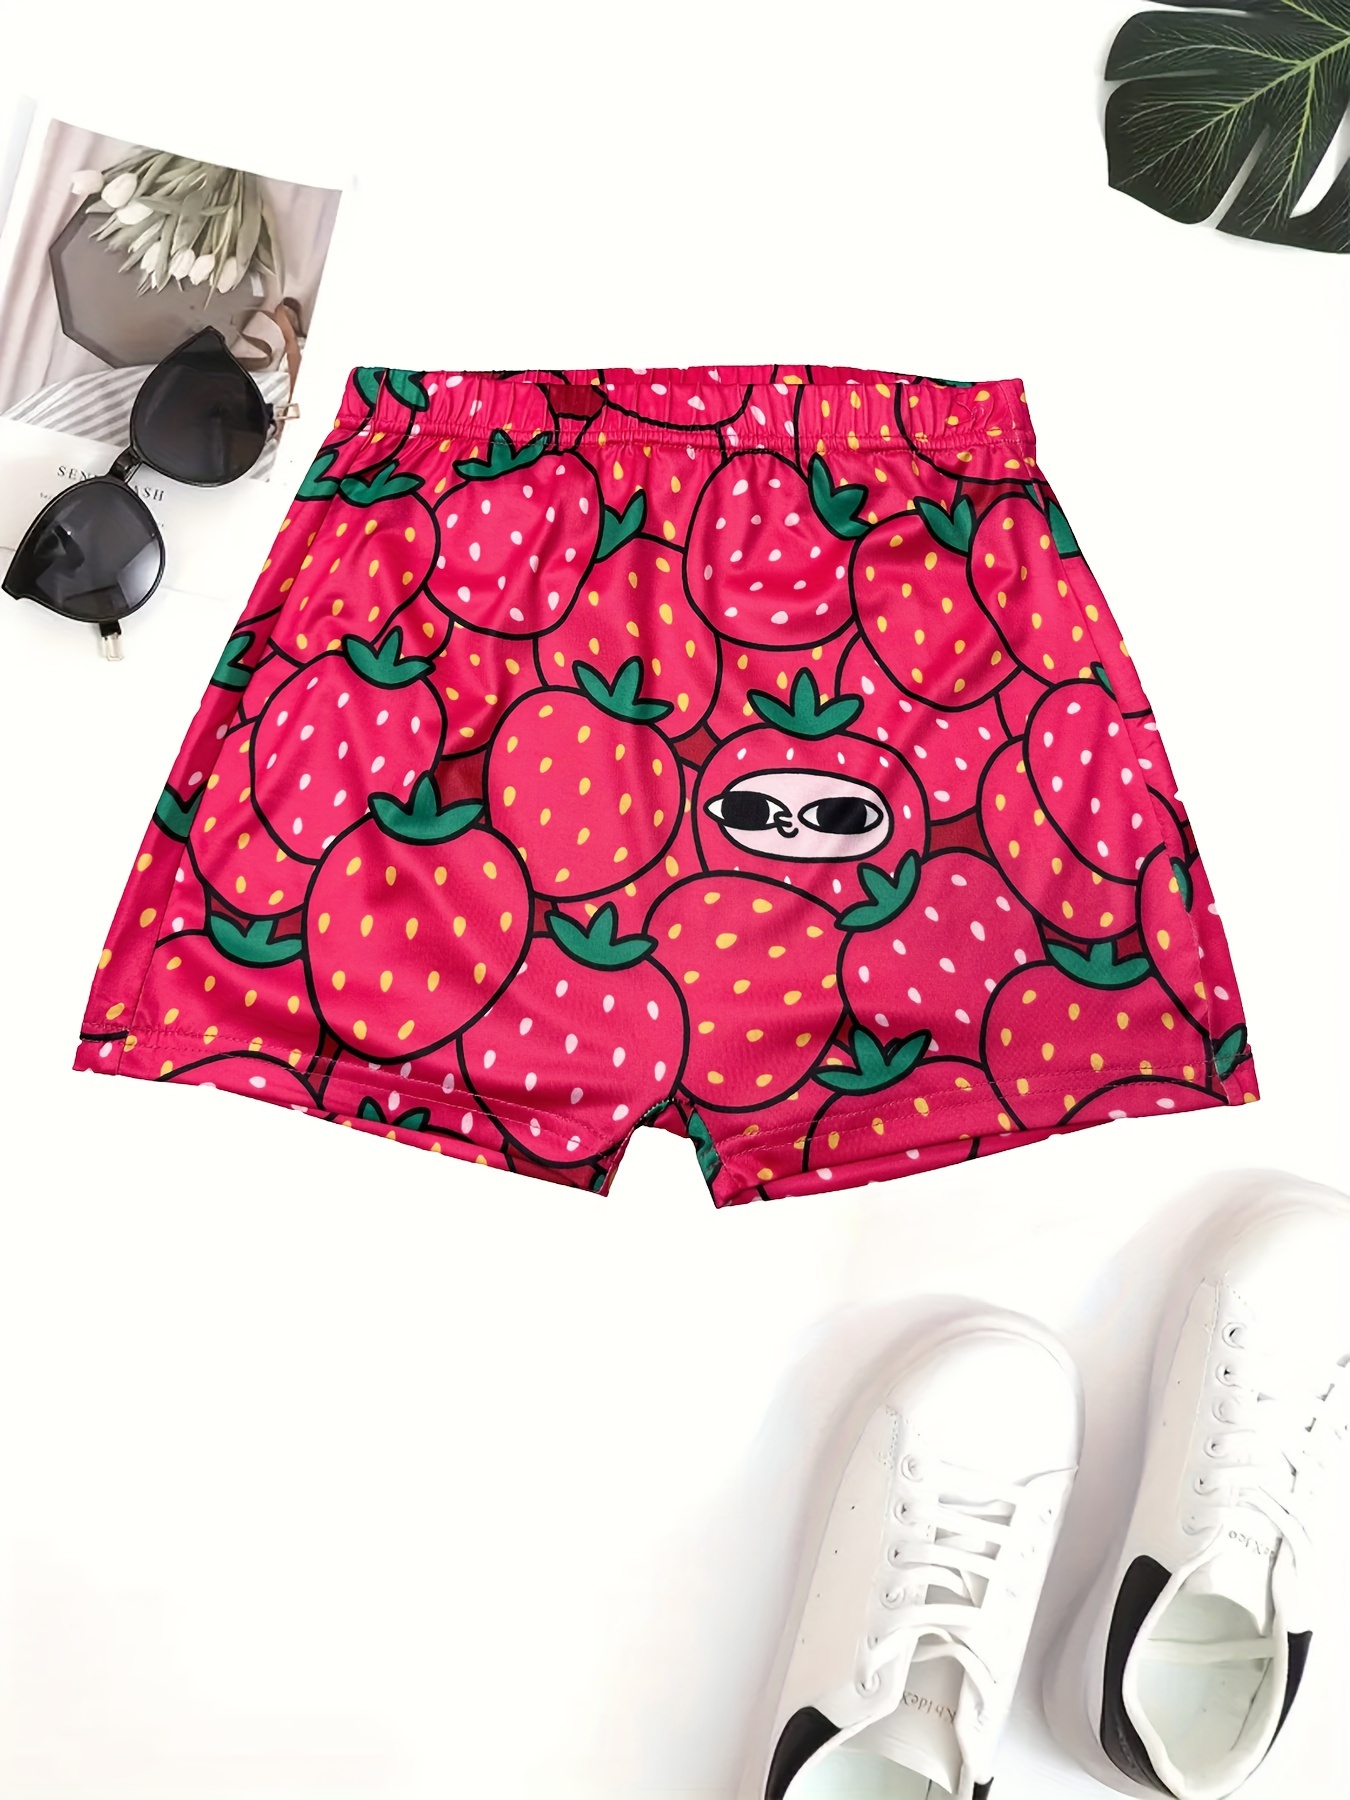 Women's Strawberry Szn 3 Compression Shorts